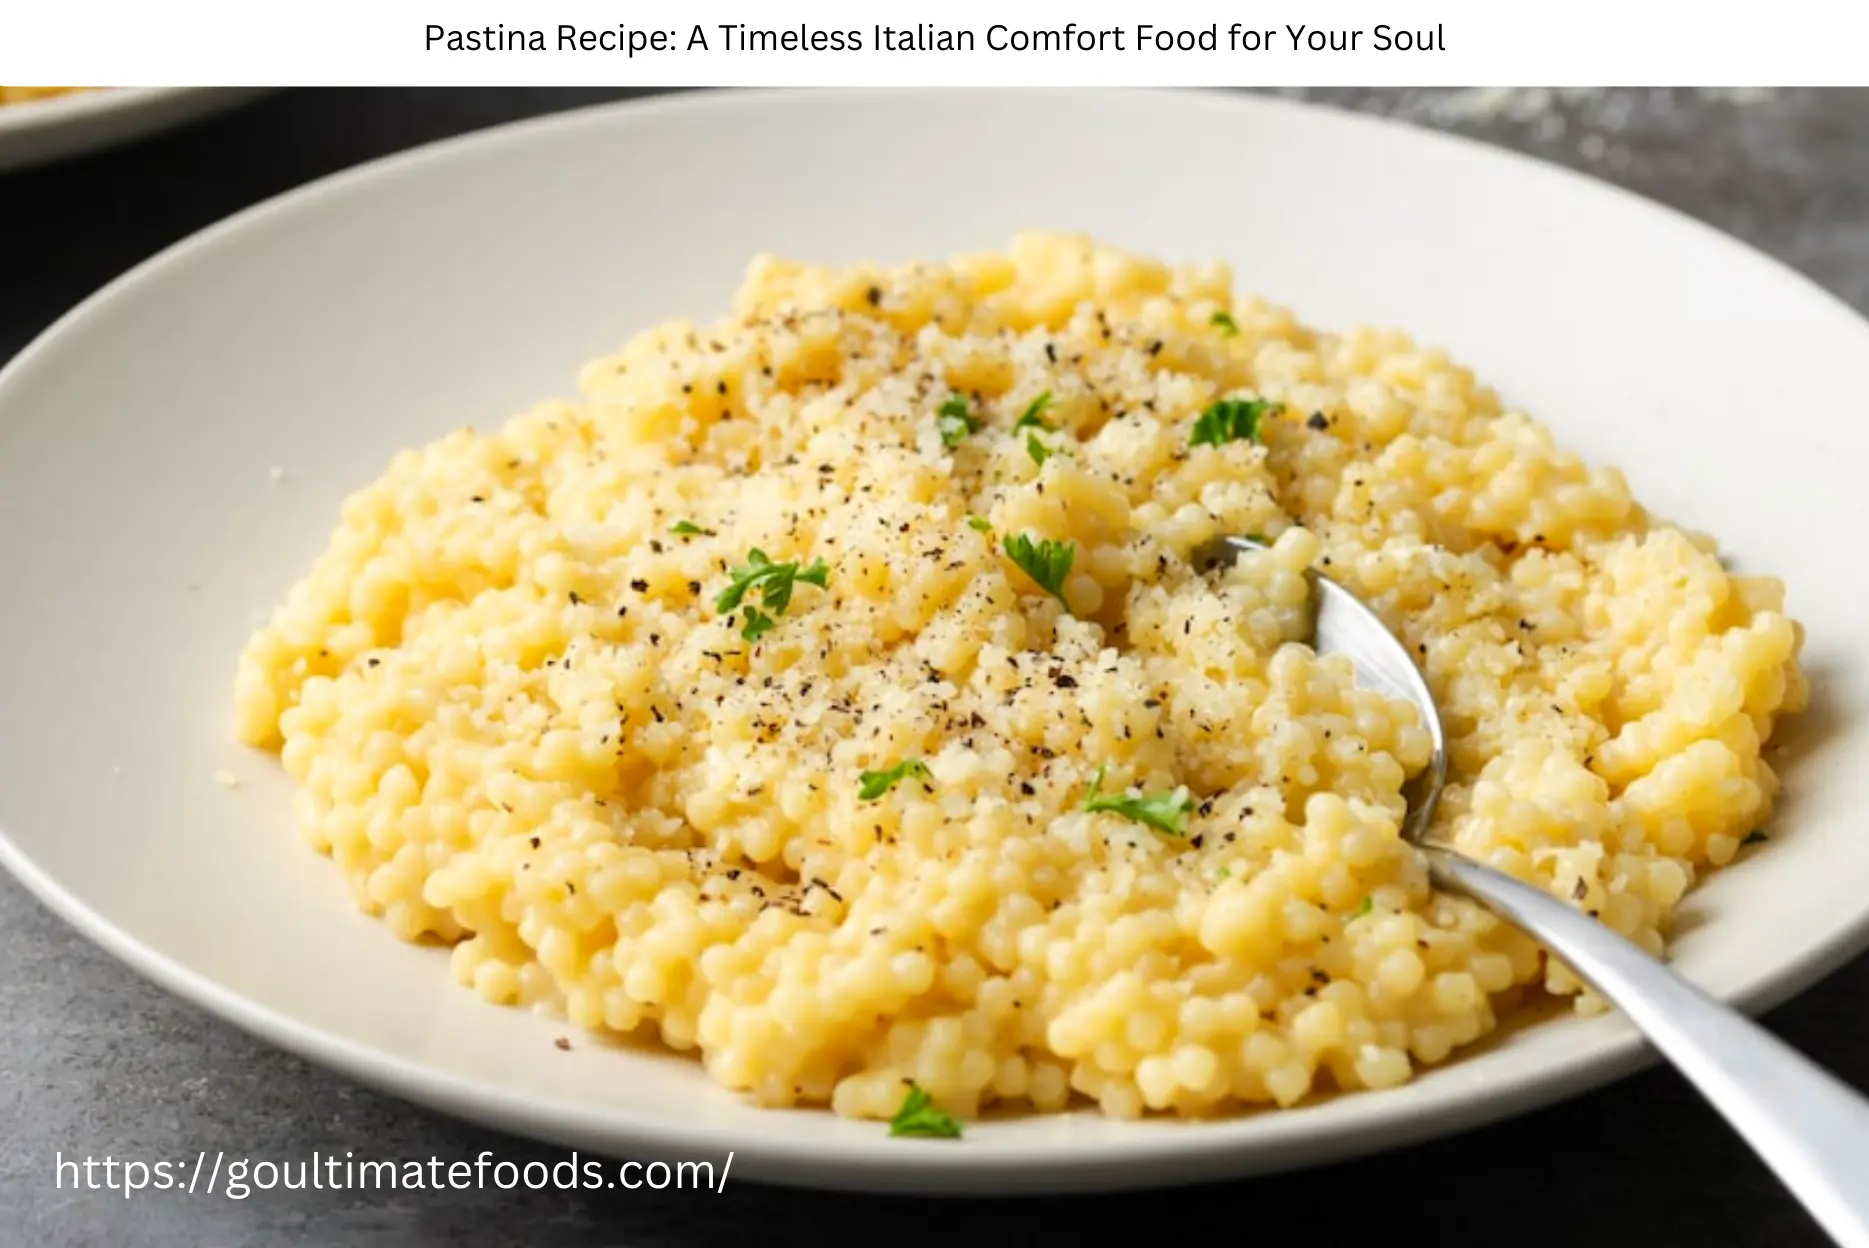 Italian Pastina Recipe